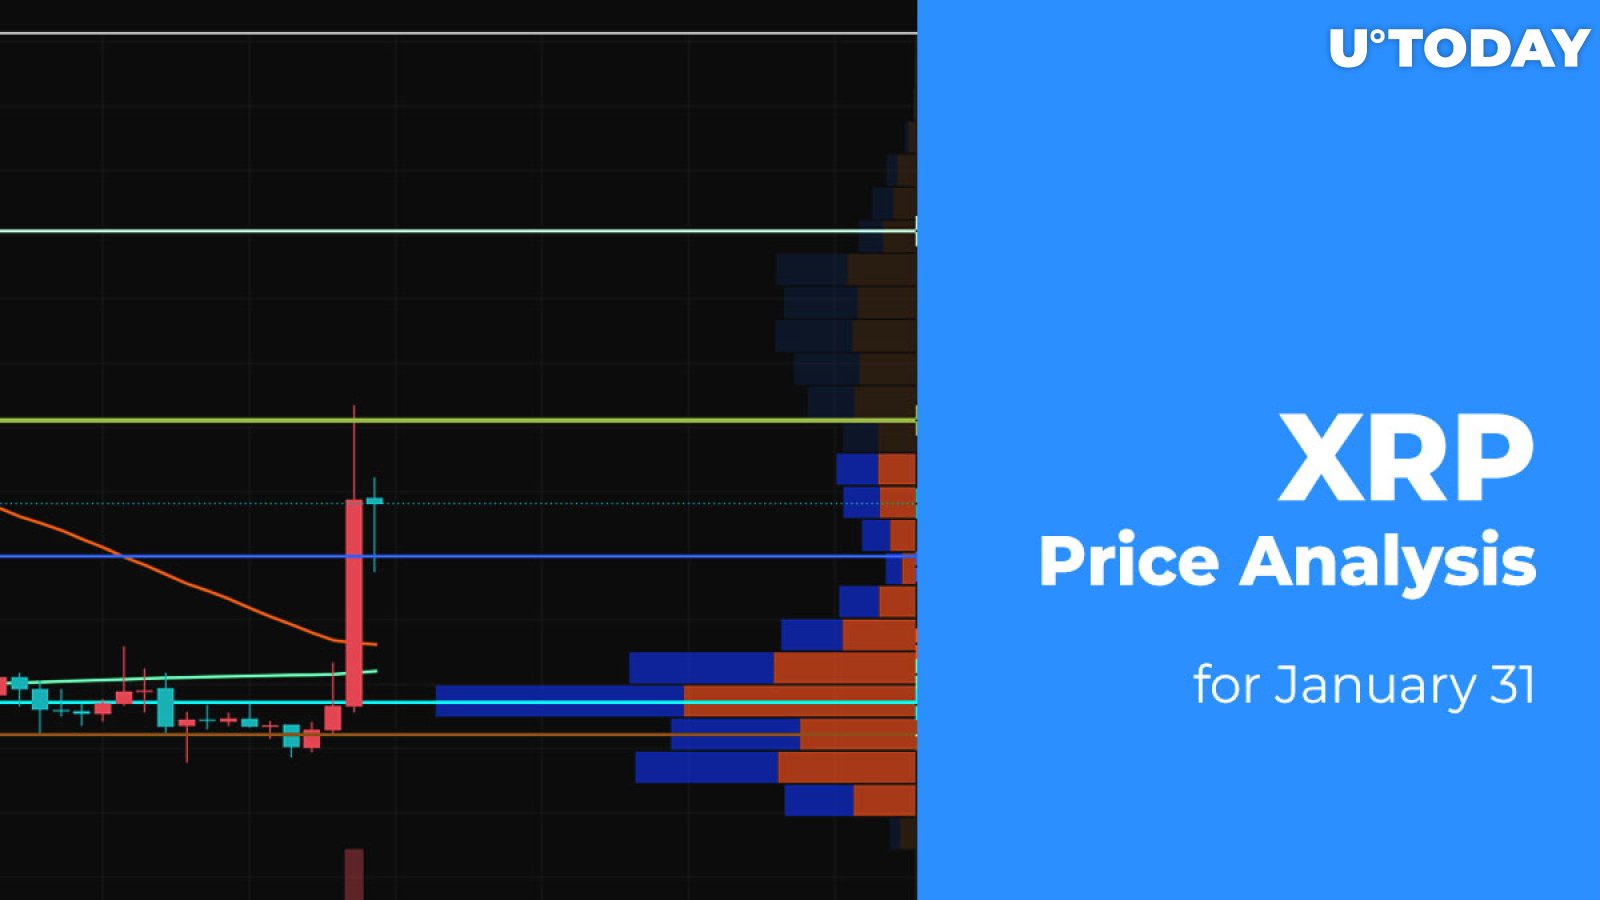 XRP Price Analysis for January 31